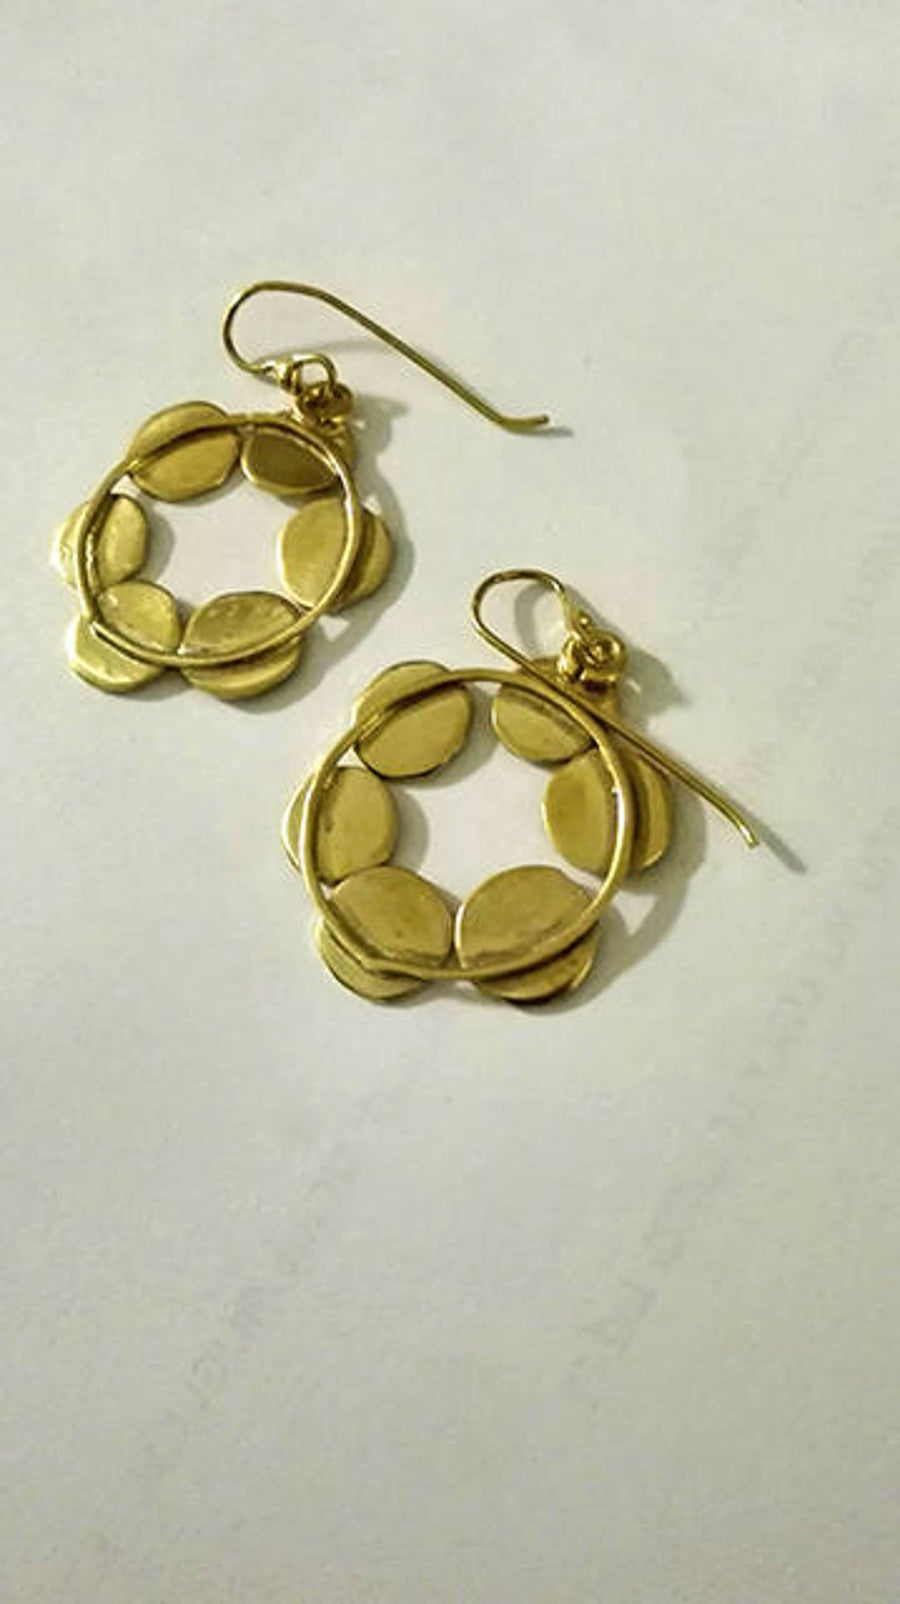 Circle Gold Earrings,Gold Geometric Earrings,Modern Geometric Dangles,Statement Dangles,Flat Earrings,Statement Earrings,Mother's Day Gift